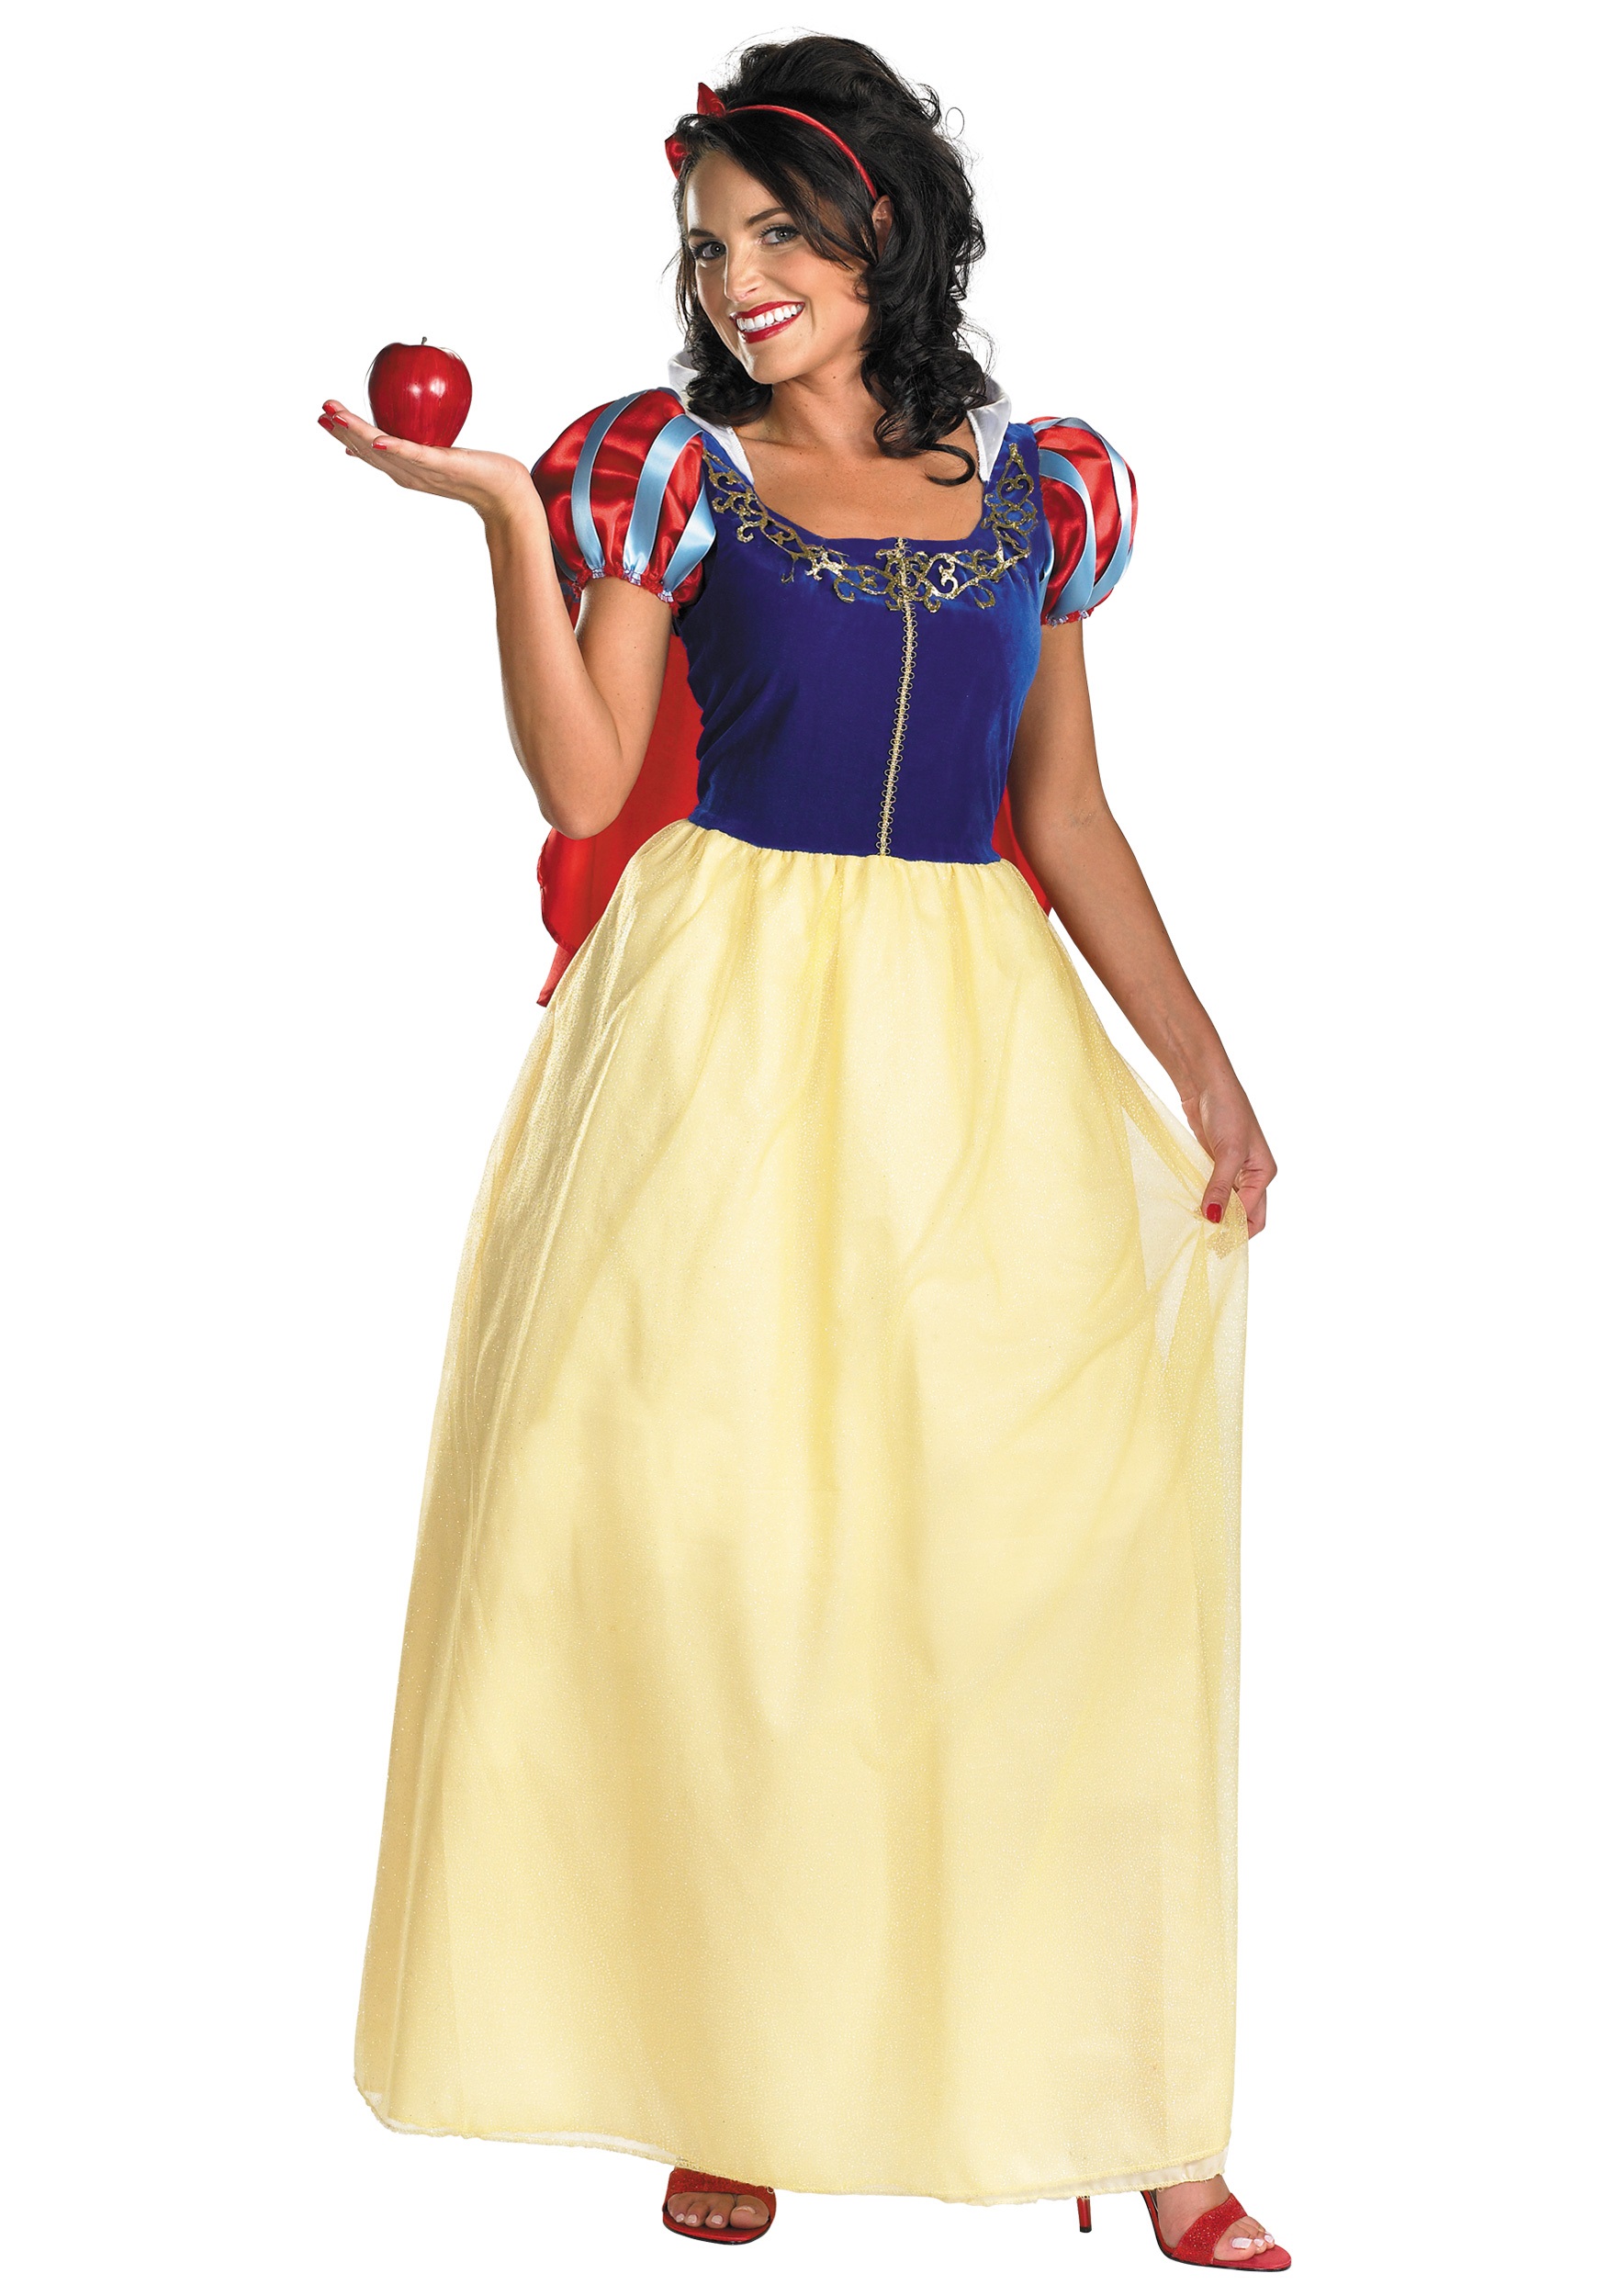 snow white costume